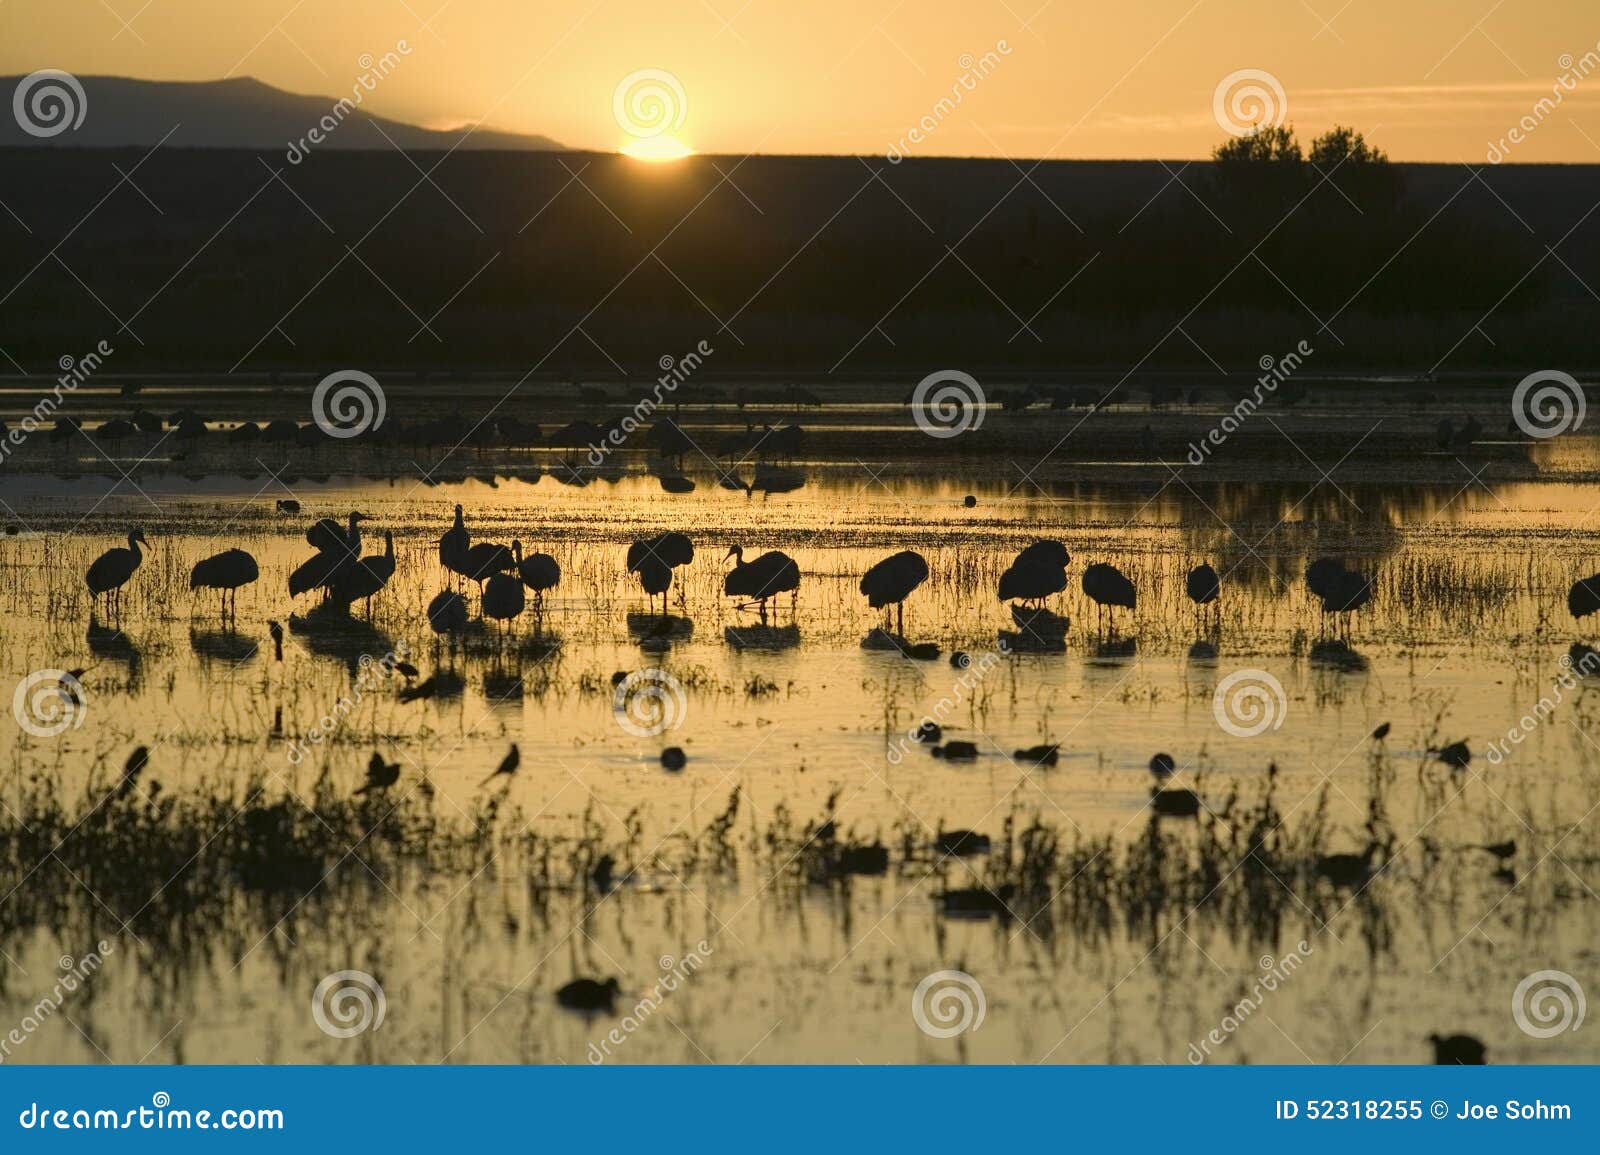 sandhill cranes walk on lake at sunrise at the bosque del apache national wildlife refuge, near san antonio and socorro, new